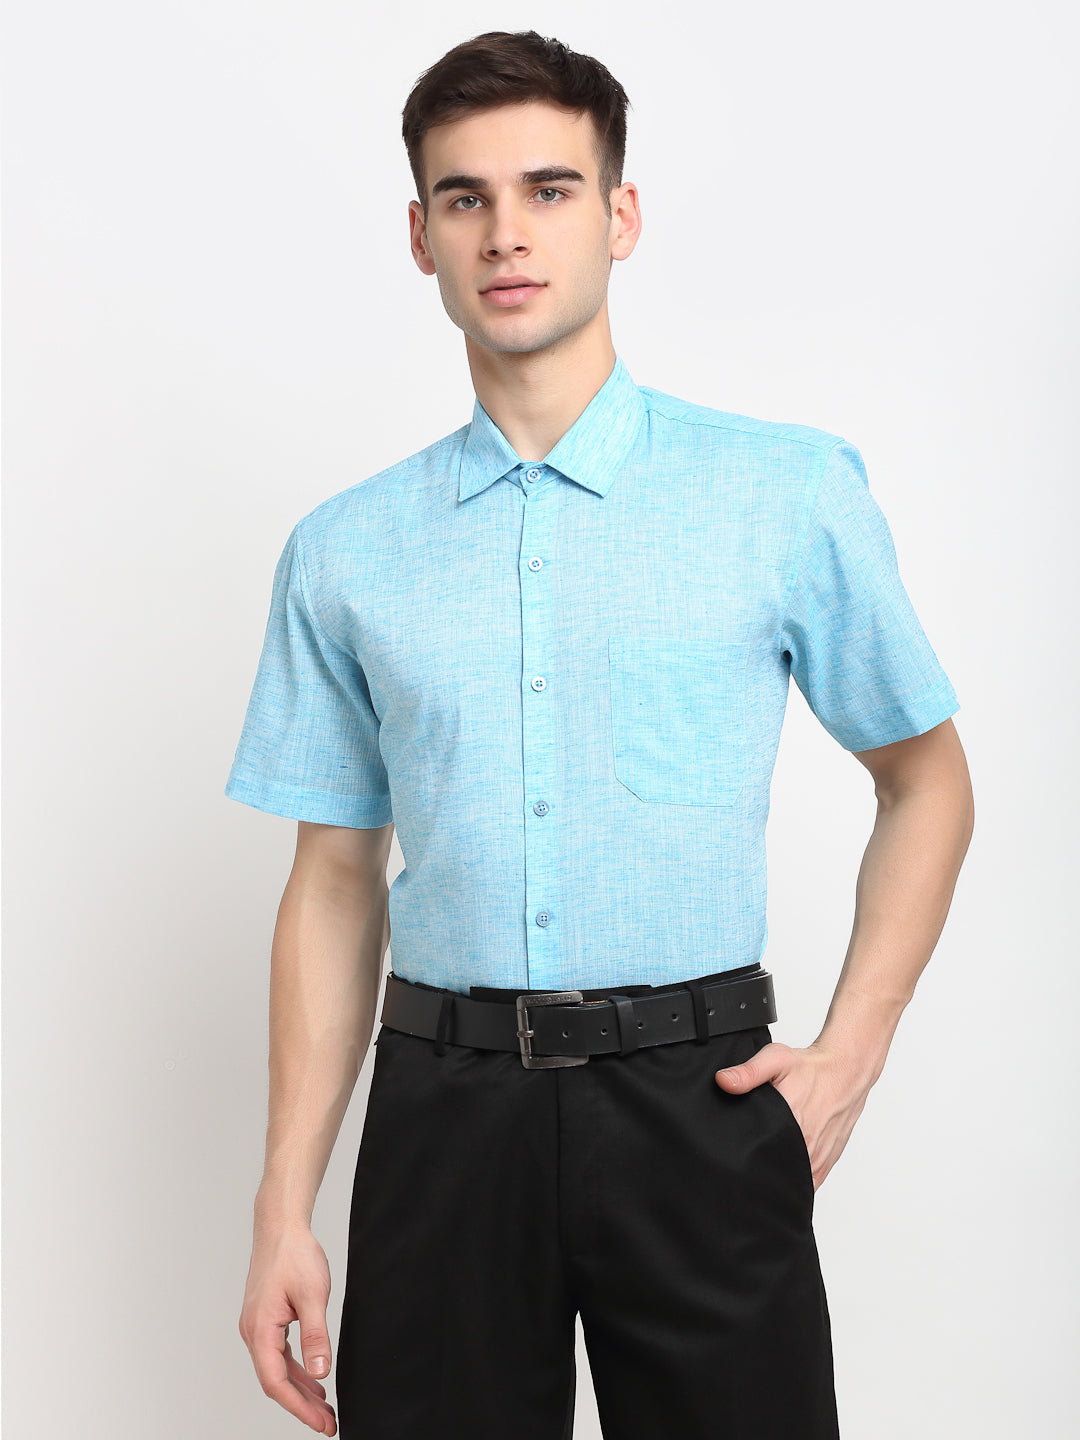 Men's Blue Solid Cotton Half Sleeves Formal Shirt ( SF 783Sky ) - Jainish